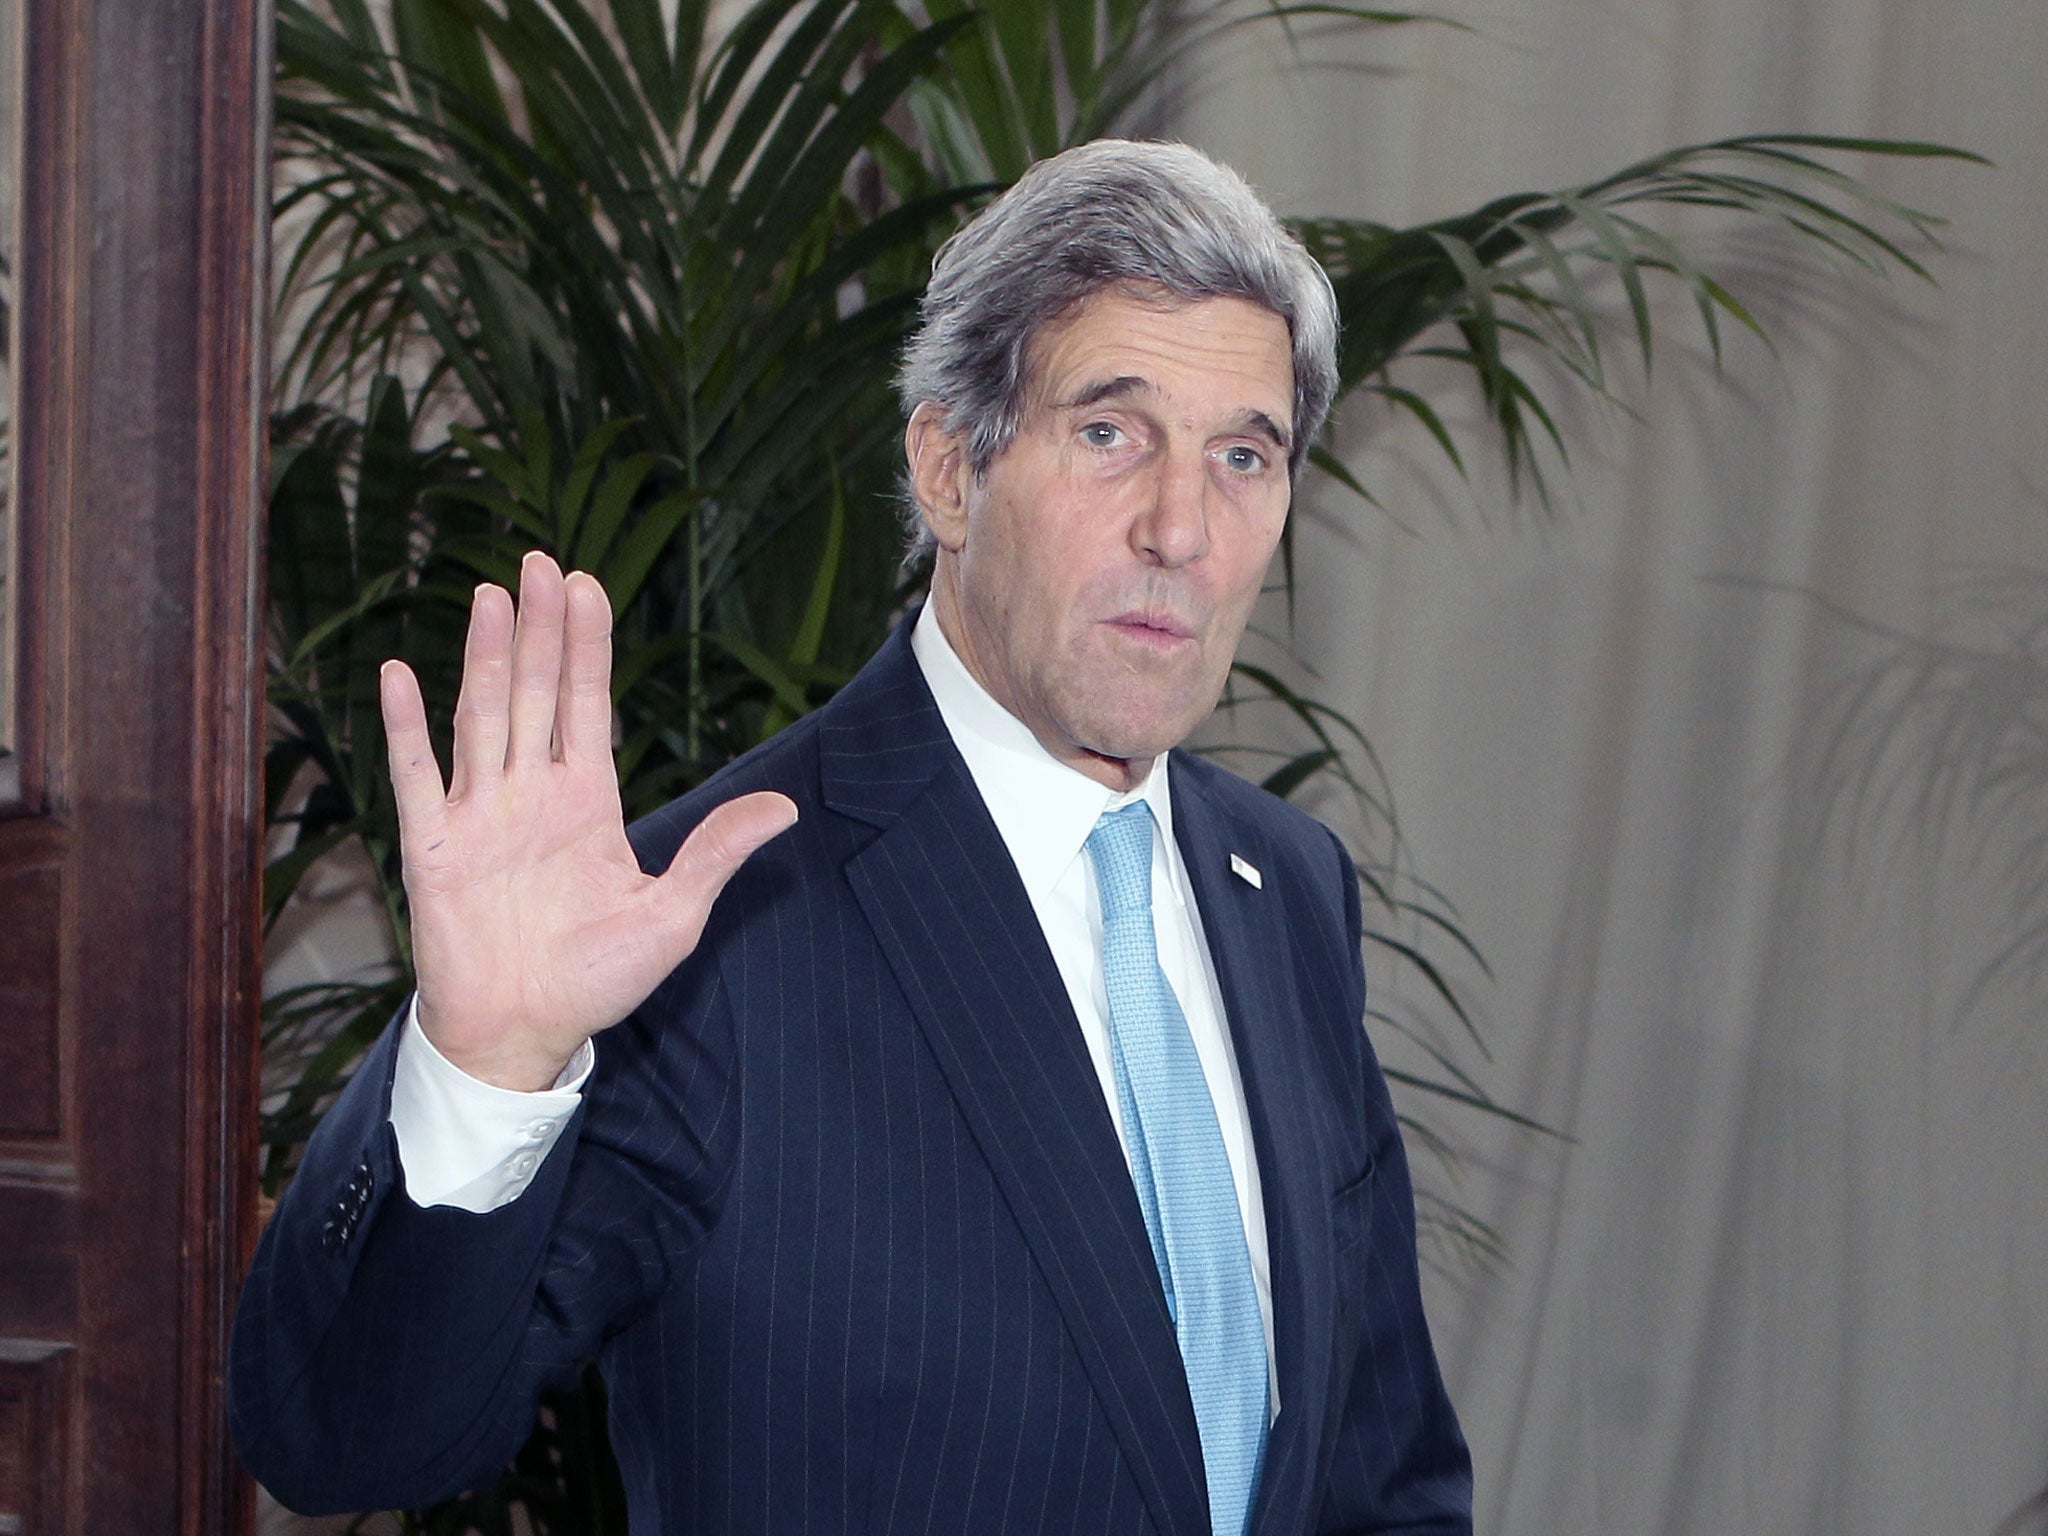 US Secretary of State John Kerry told NBC News that Russian needs to make careful decisions regarding Ukraine